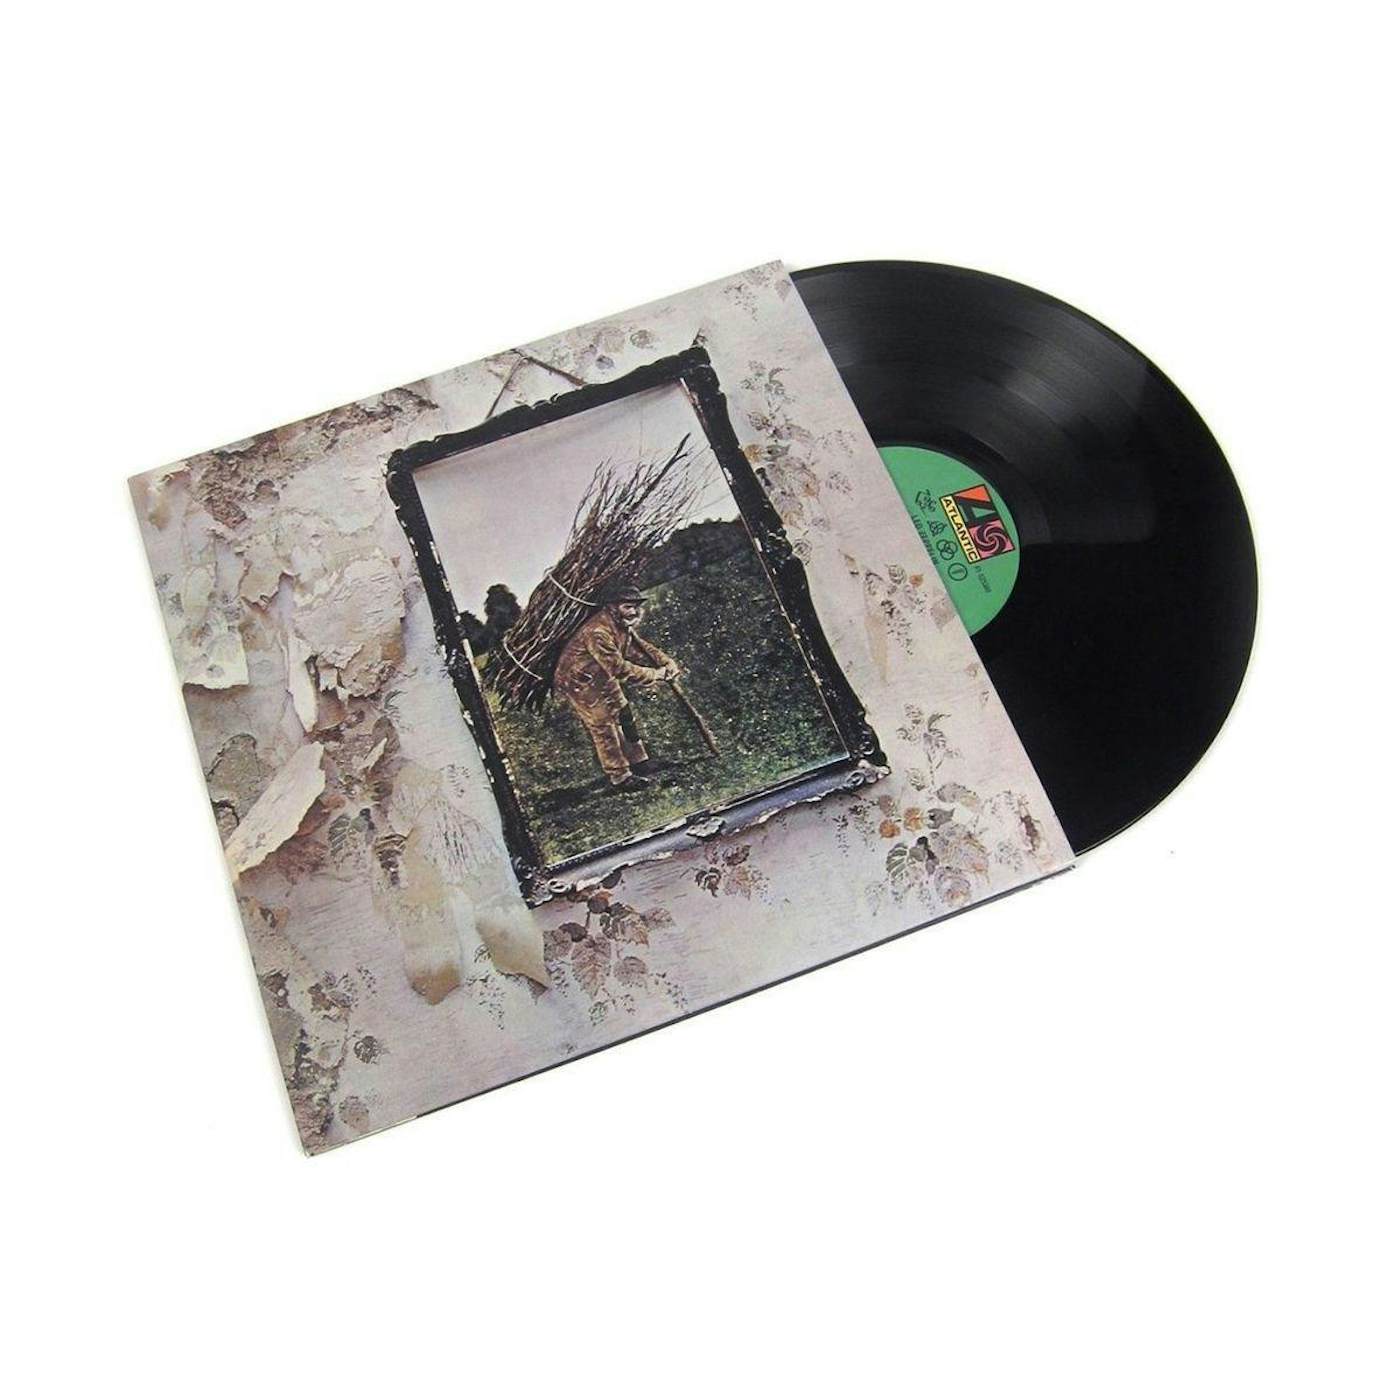  Led Zeppelin IV (Limited Edition/180g/Digitally Remastered) Vinyl LP